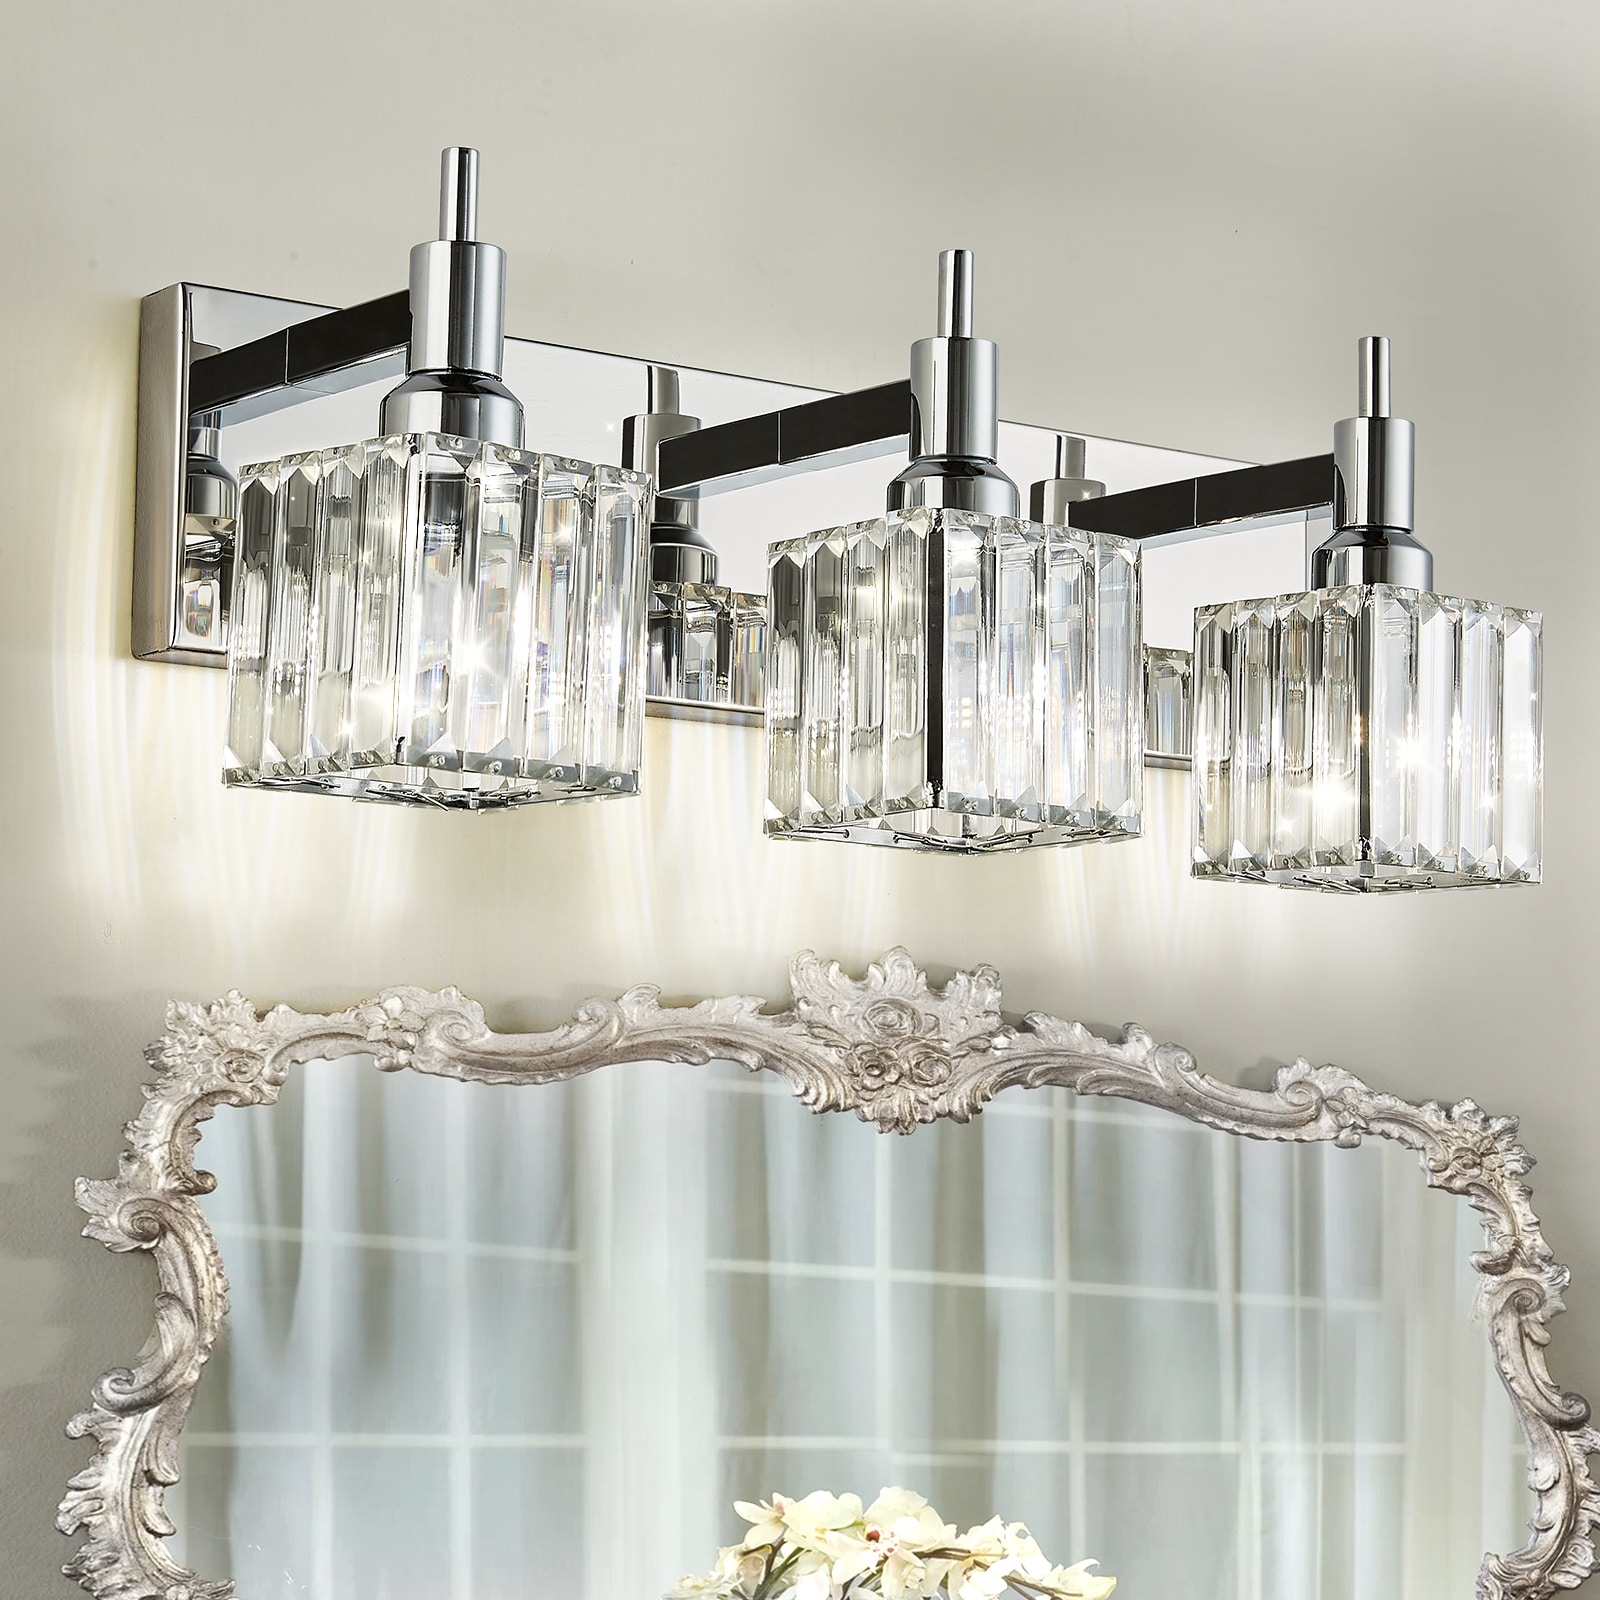 2/3/4-Light Modern Bathroom Crystal Vanity Light Wall Sconces On Sale  Bed Bath  Beyond 37979448